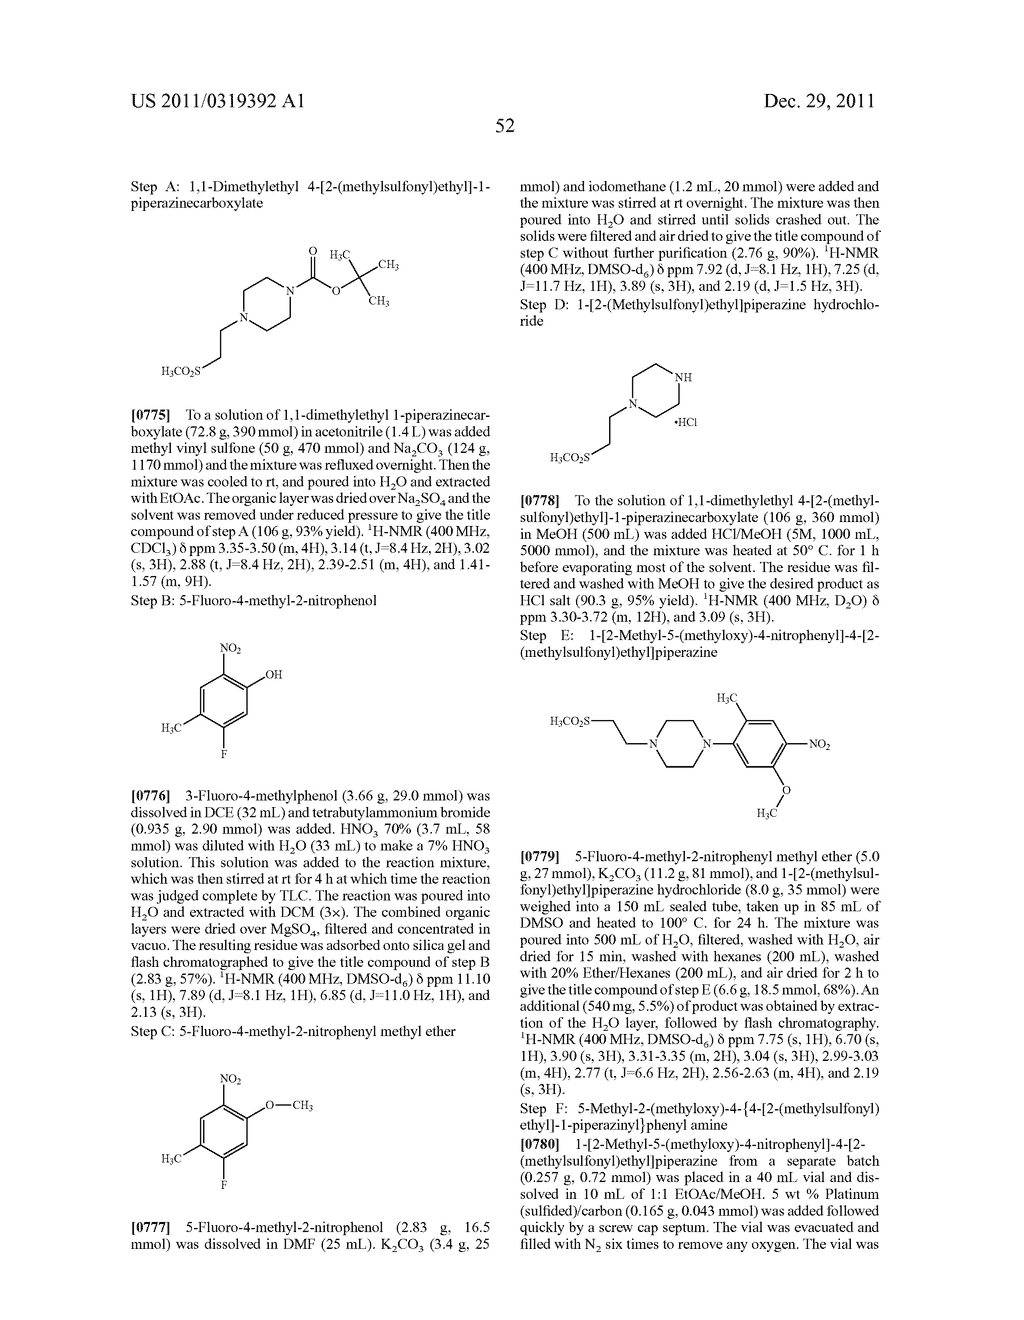 Thiazole Sulfonamide And Oxazole Sulfonamide Kinase Inhibitors - diagram, schematic, and image 54